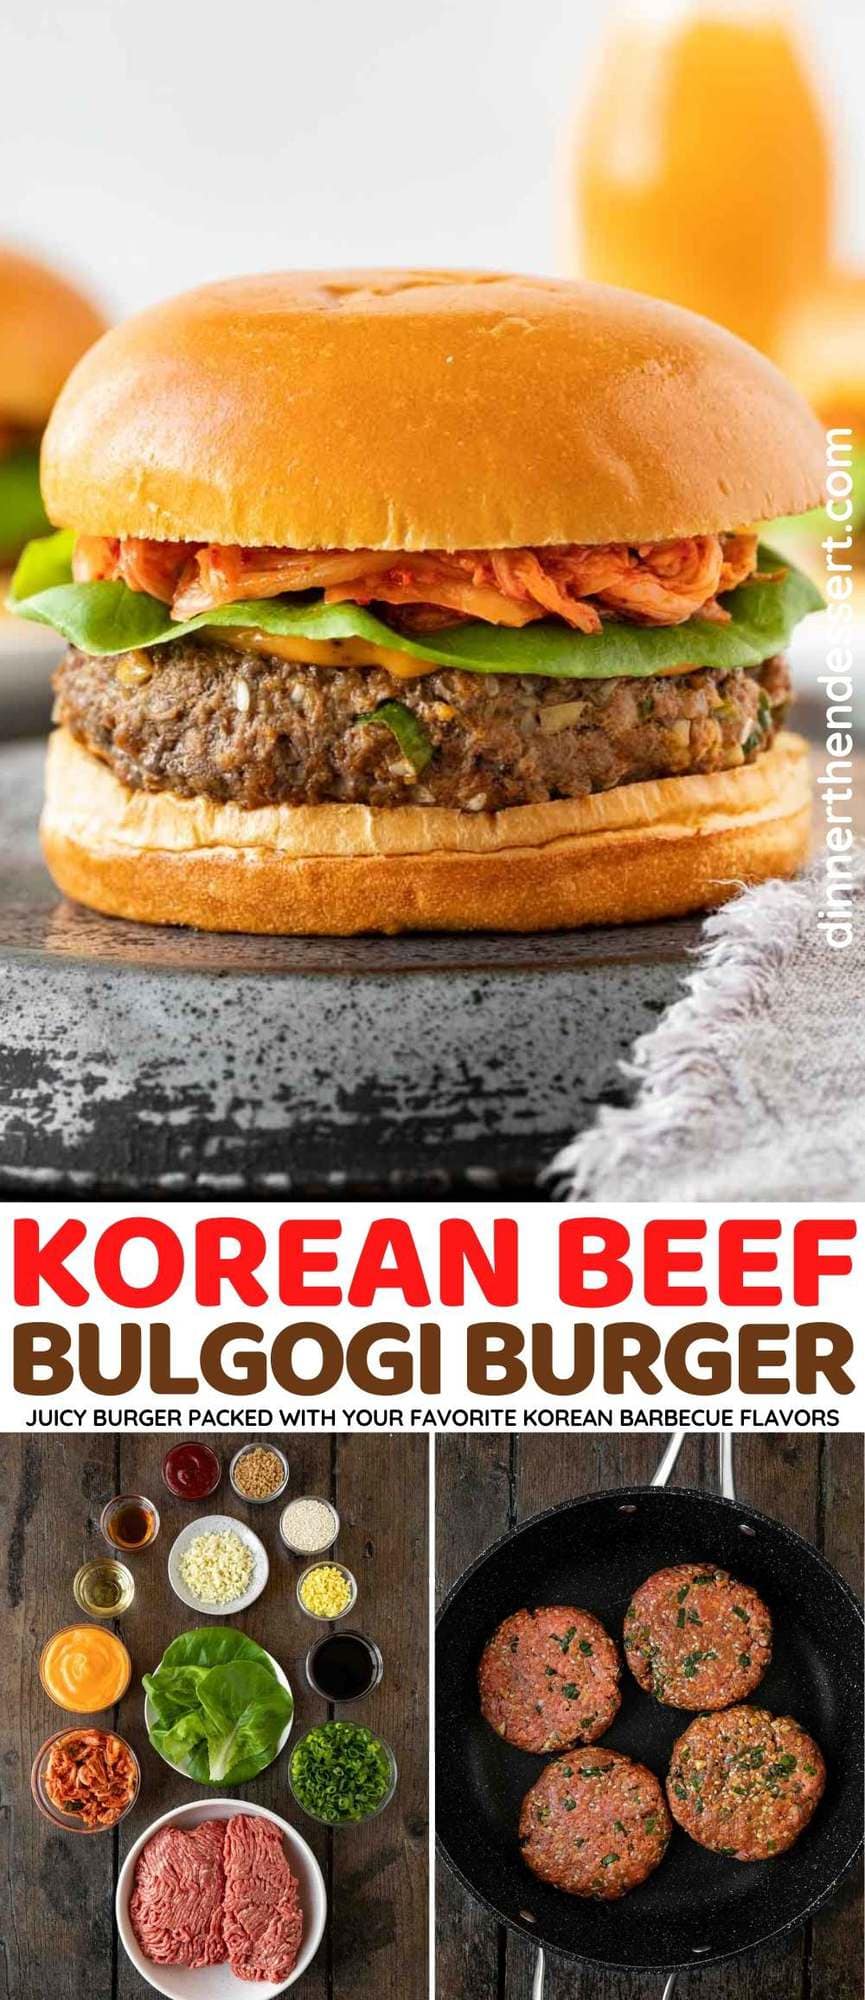 Korean Beef Bulgogi Burger collage